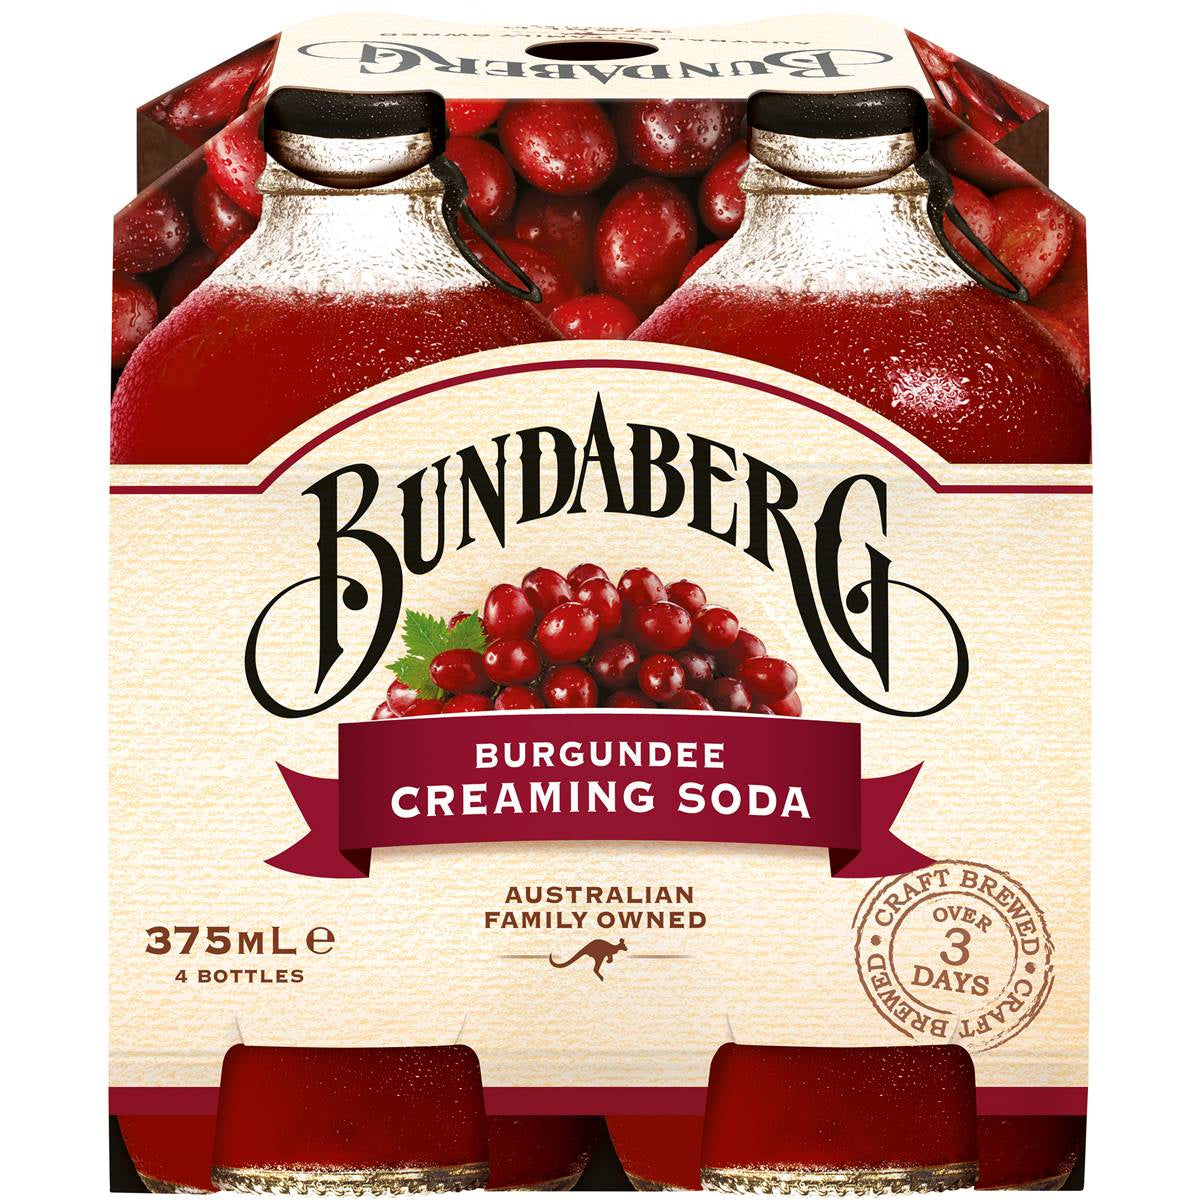 Bundaberg Burgundee Creaming Soda 4 x 375ml